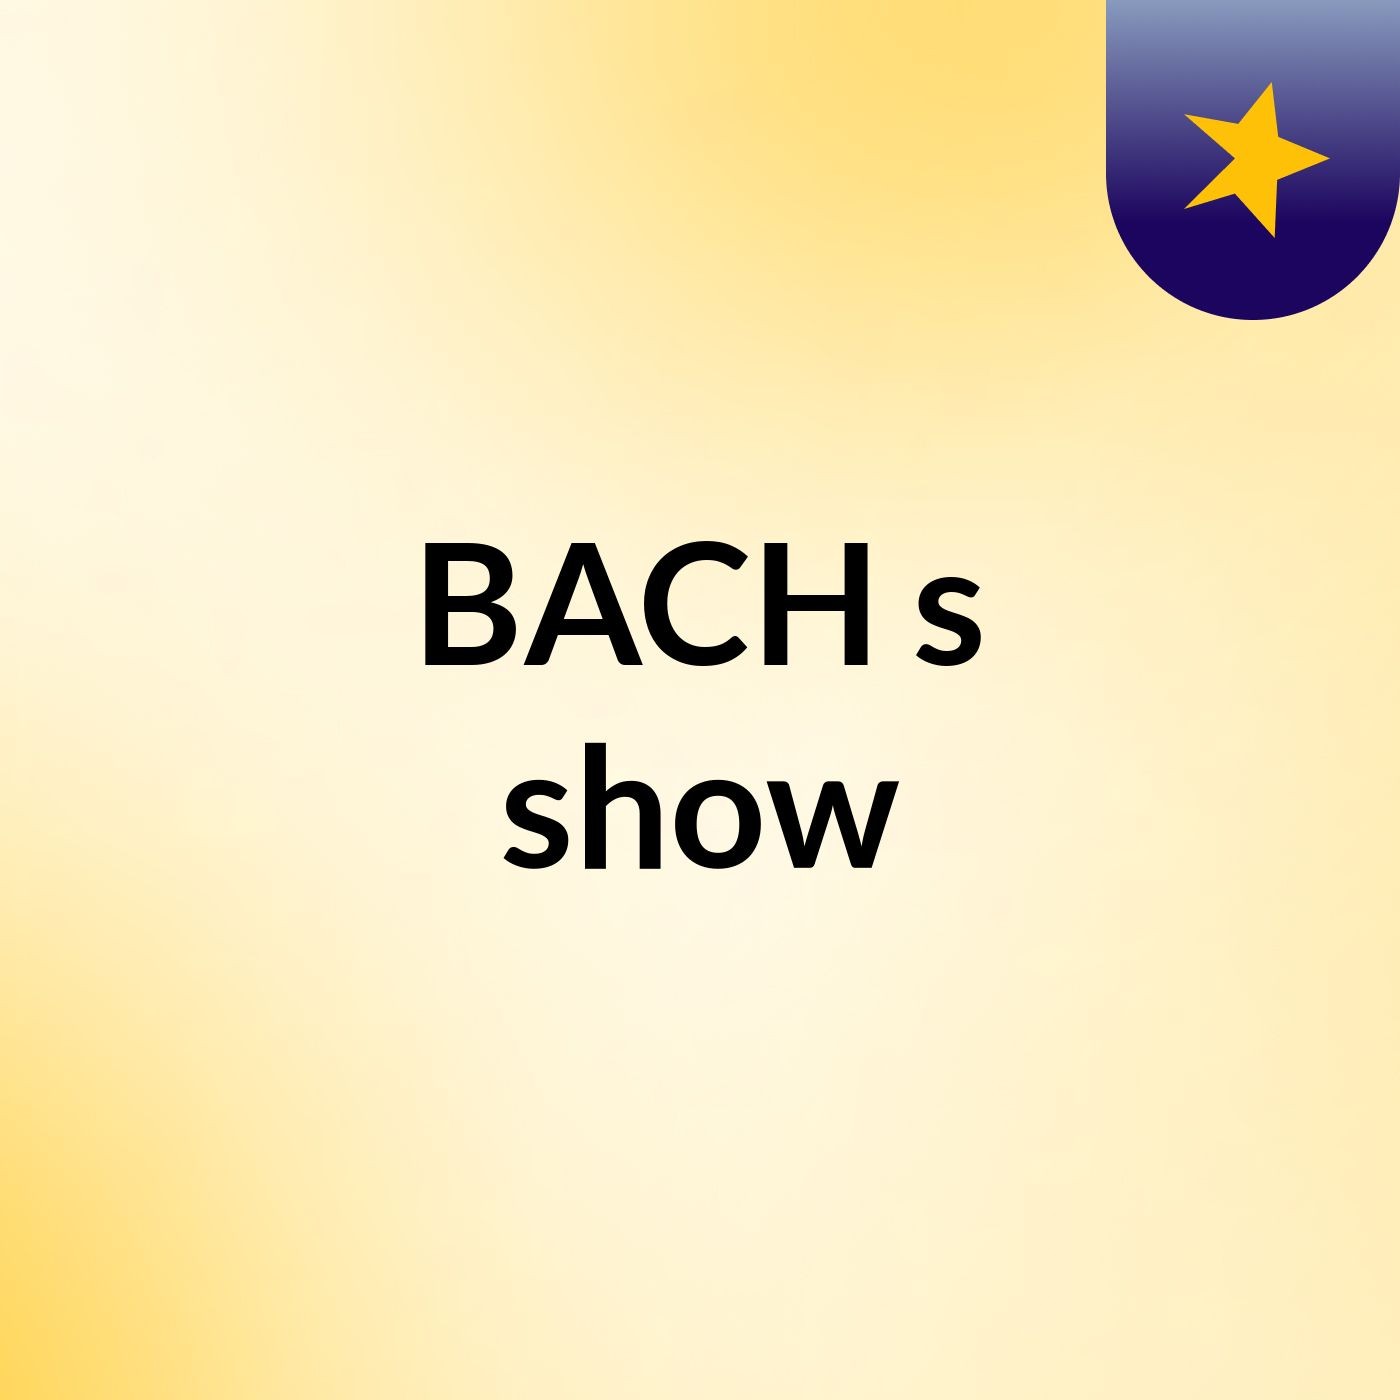 BACH's show